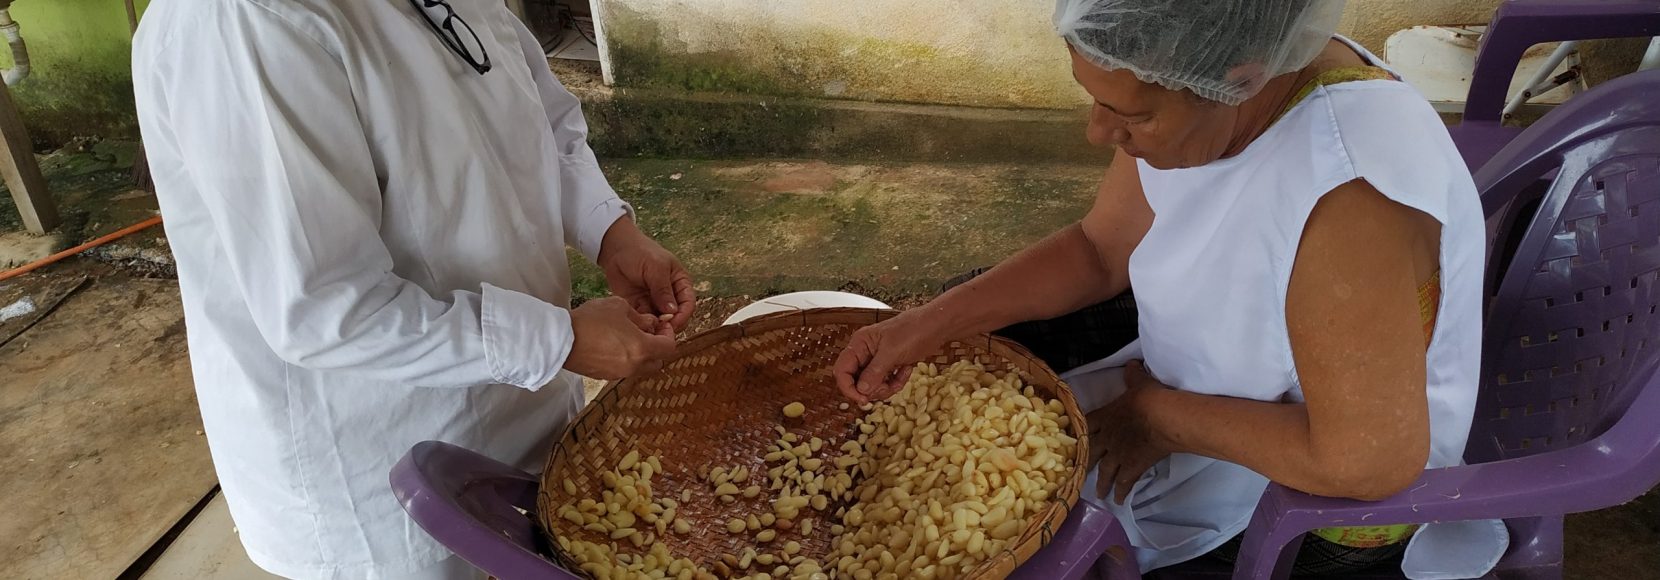 A family-run small business in Brazil produces fresh garlic.